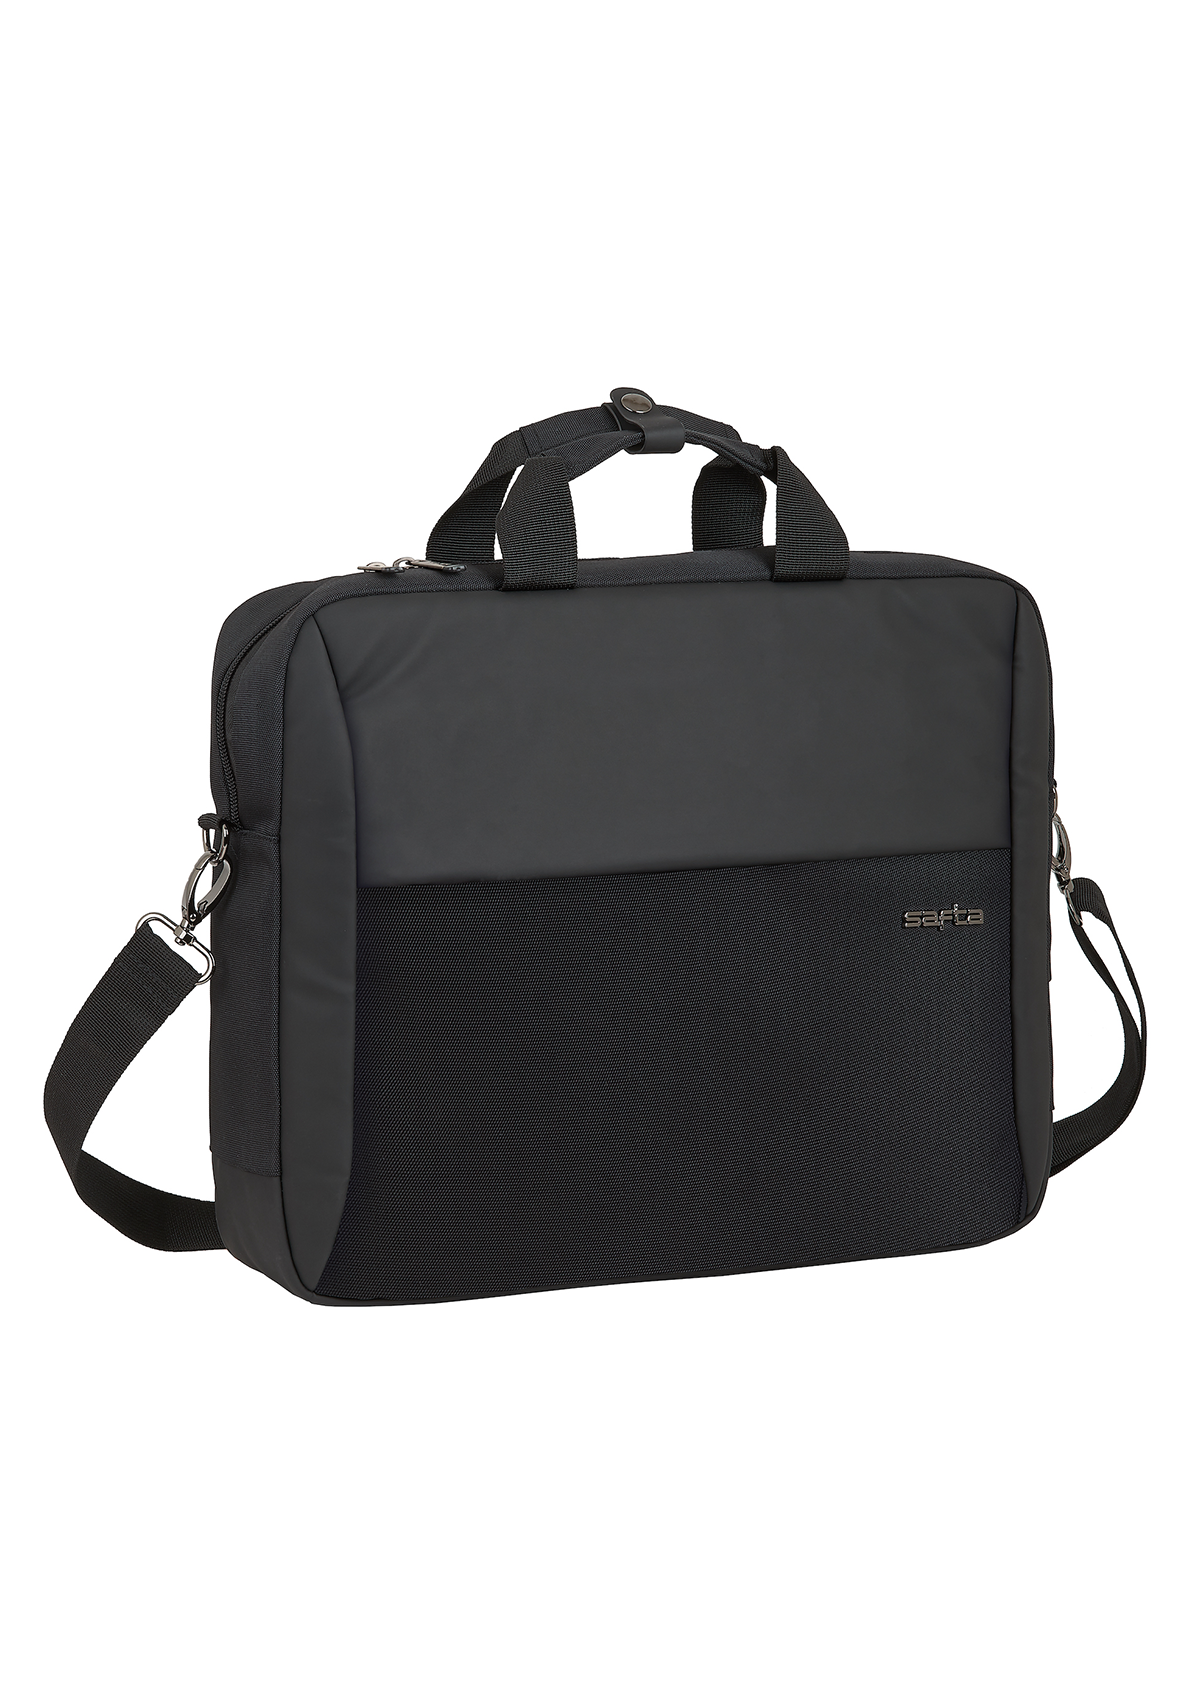 Safta Business Laptop Bag 15.6"